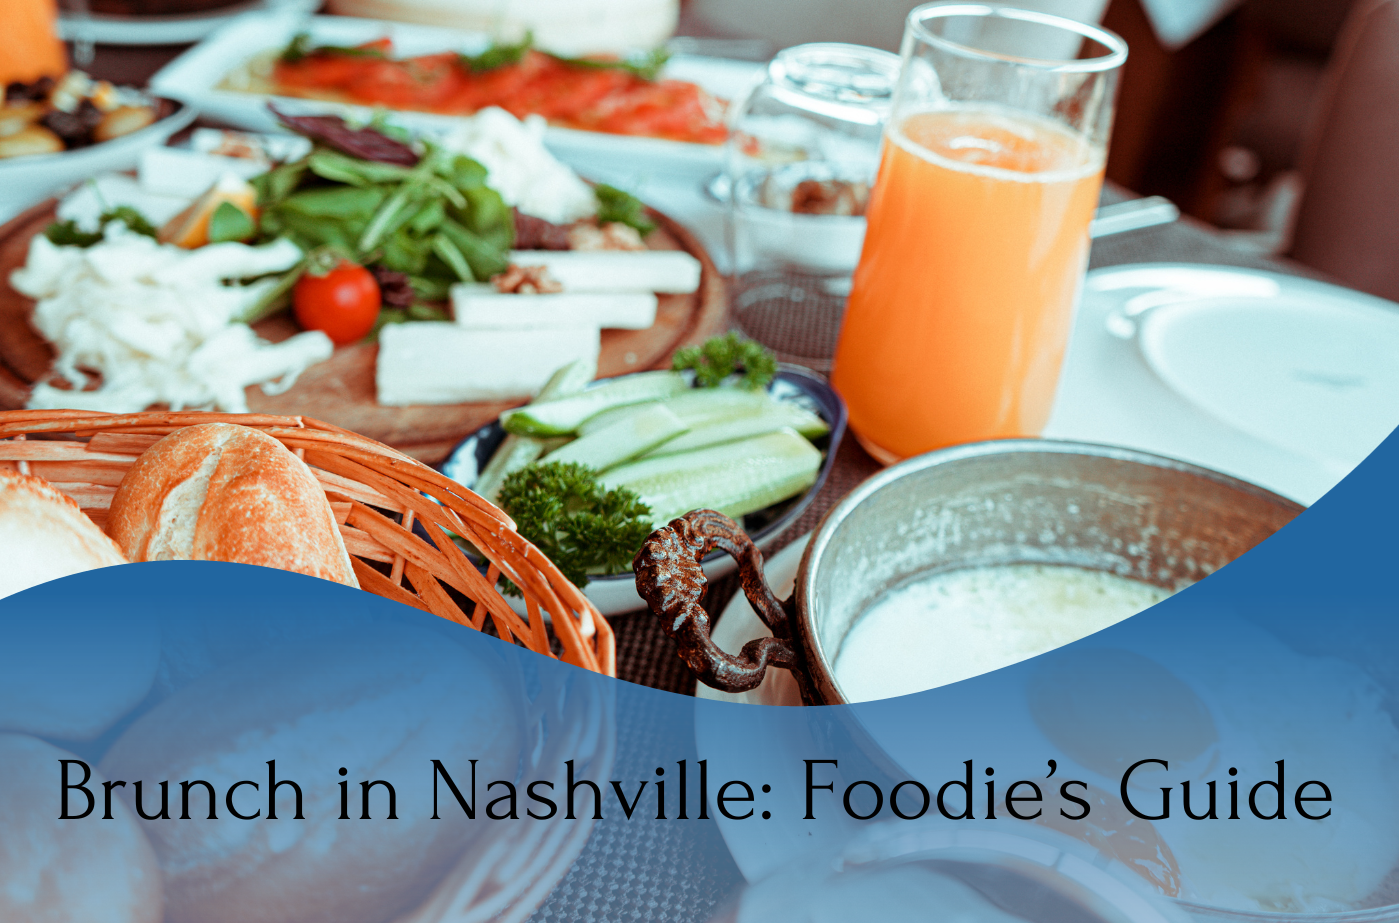 Brunch in Nashville: A Foodie's Guide